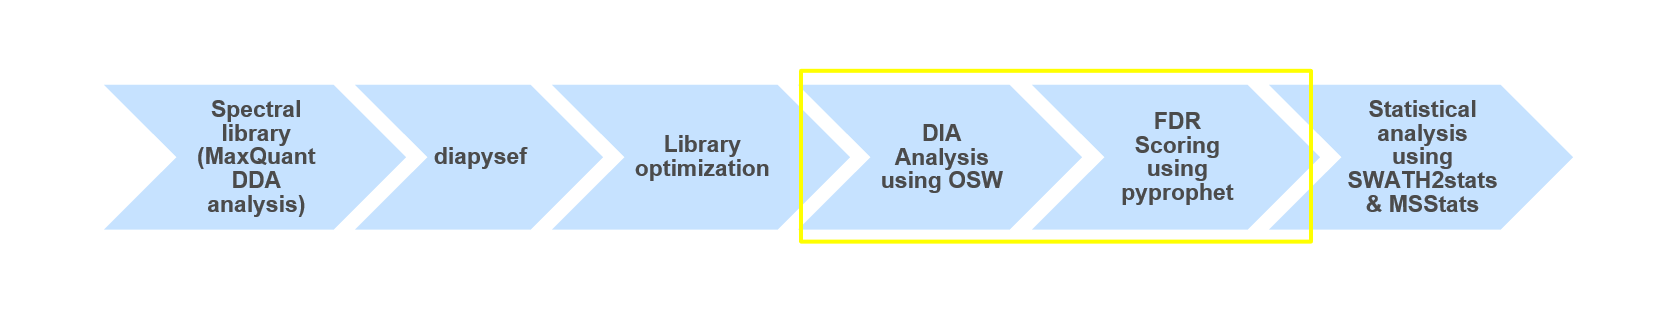 DIA analysis summary